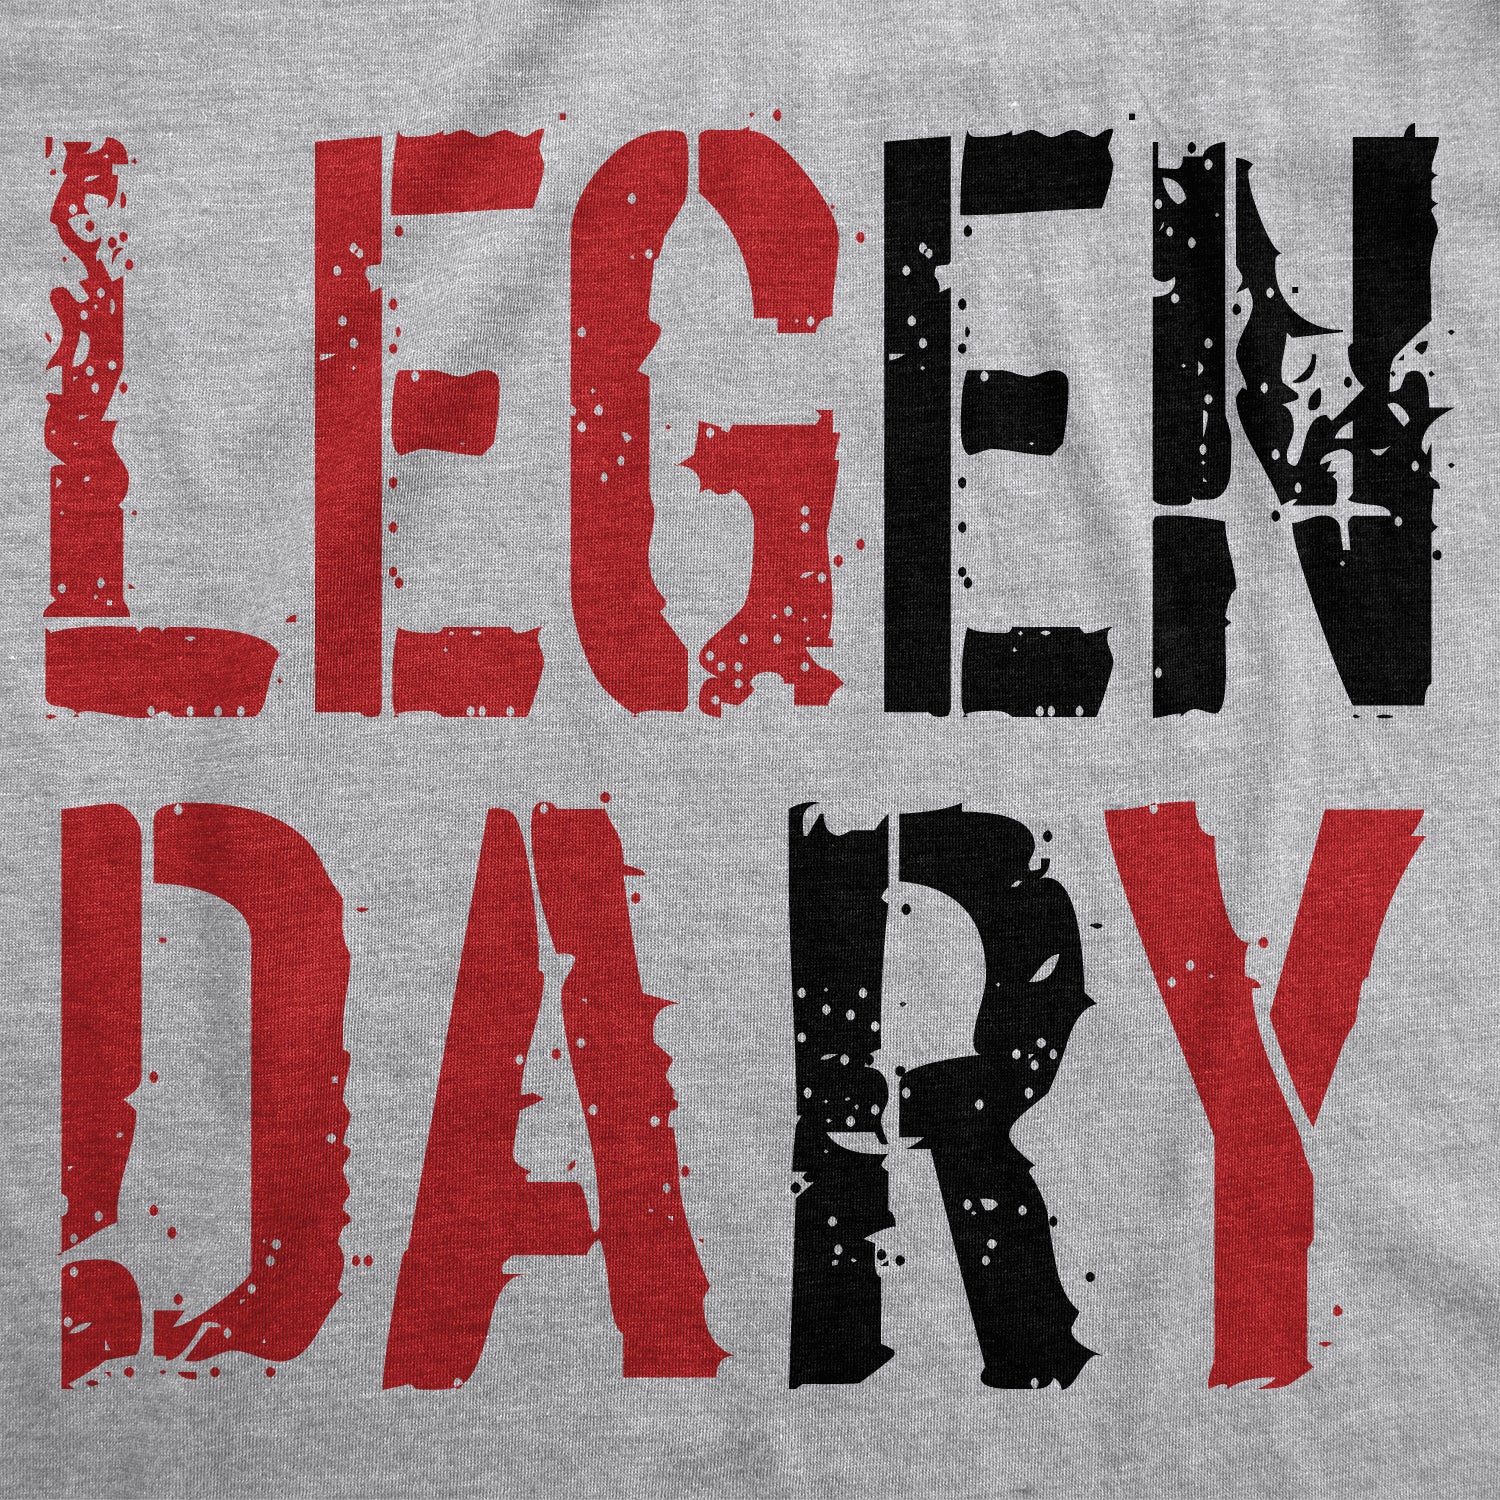 Funny Light Heather Grey - Leg Day Legendary Leg Day Mens Tank Top Nerdy Fitness Tee